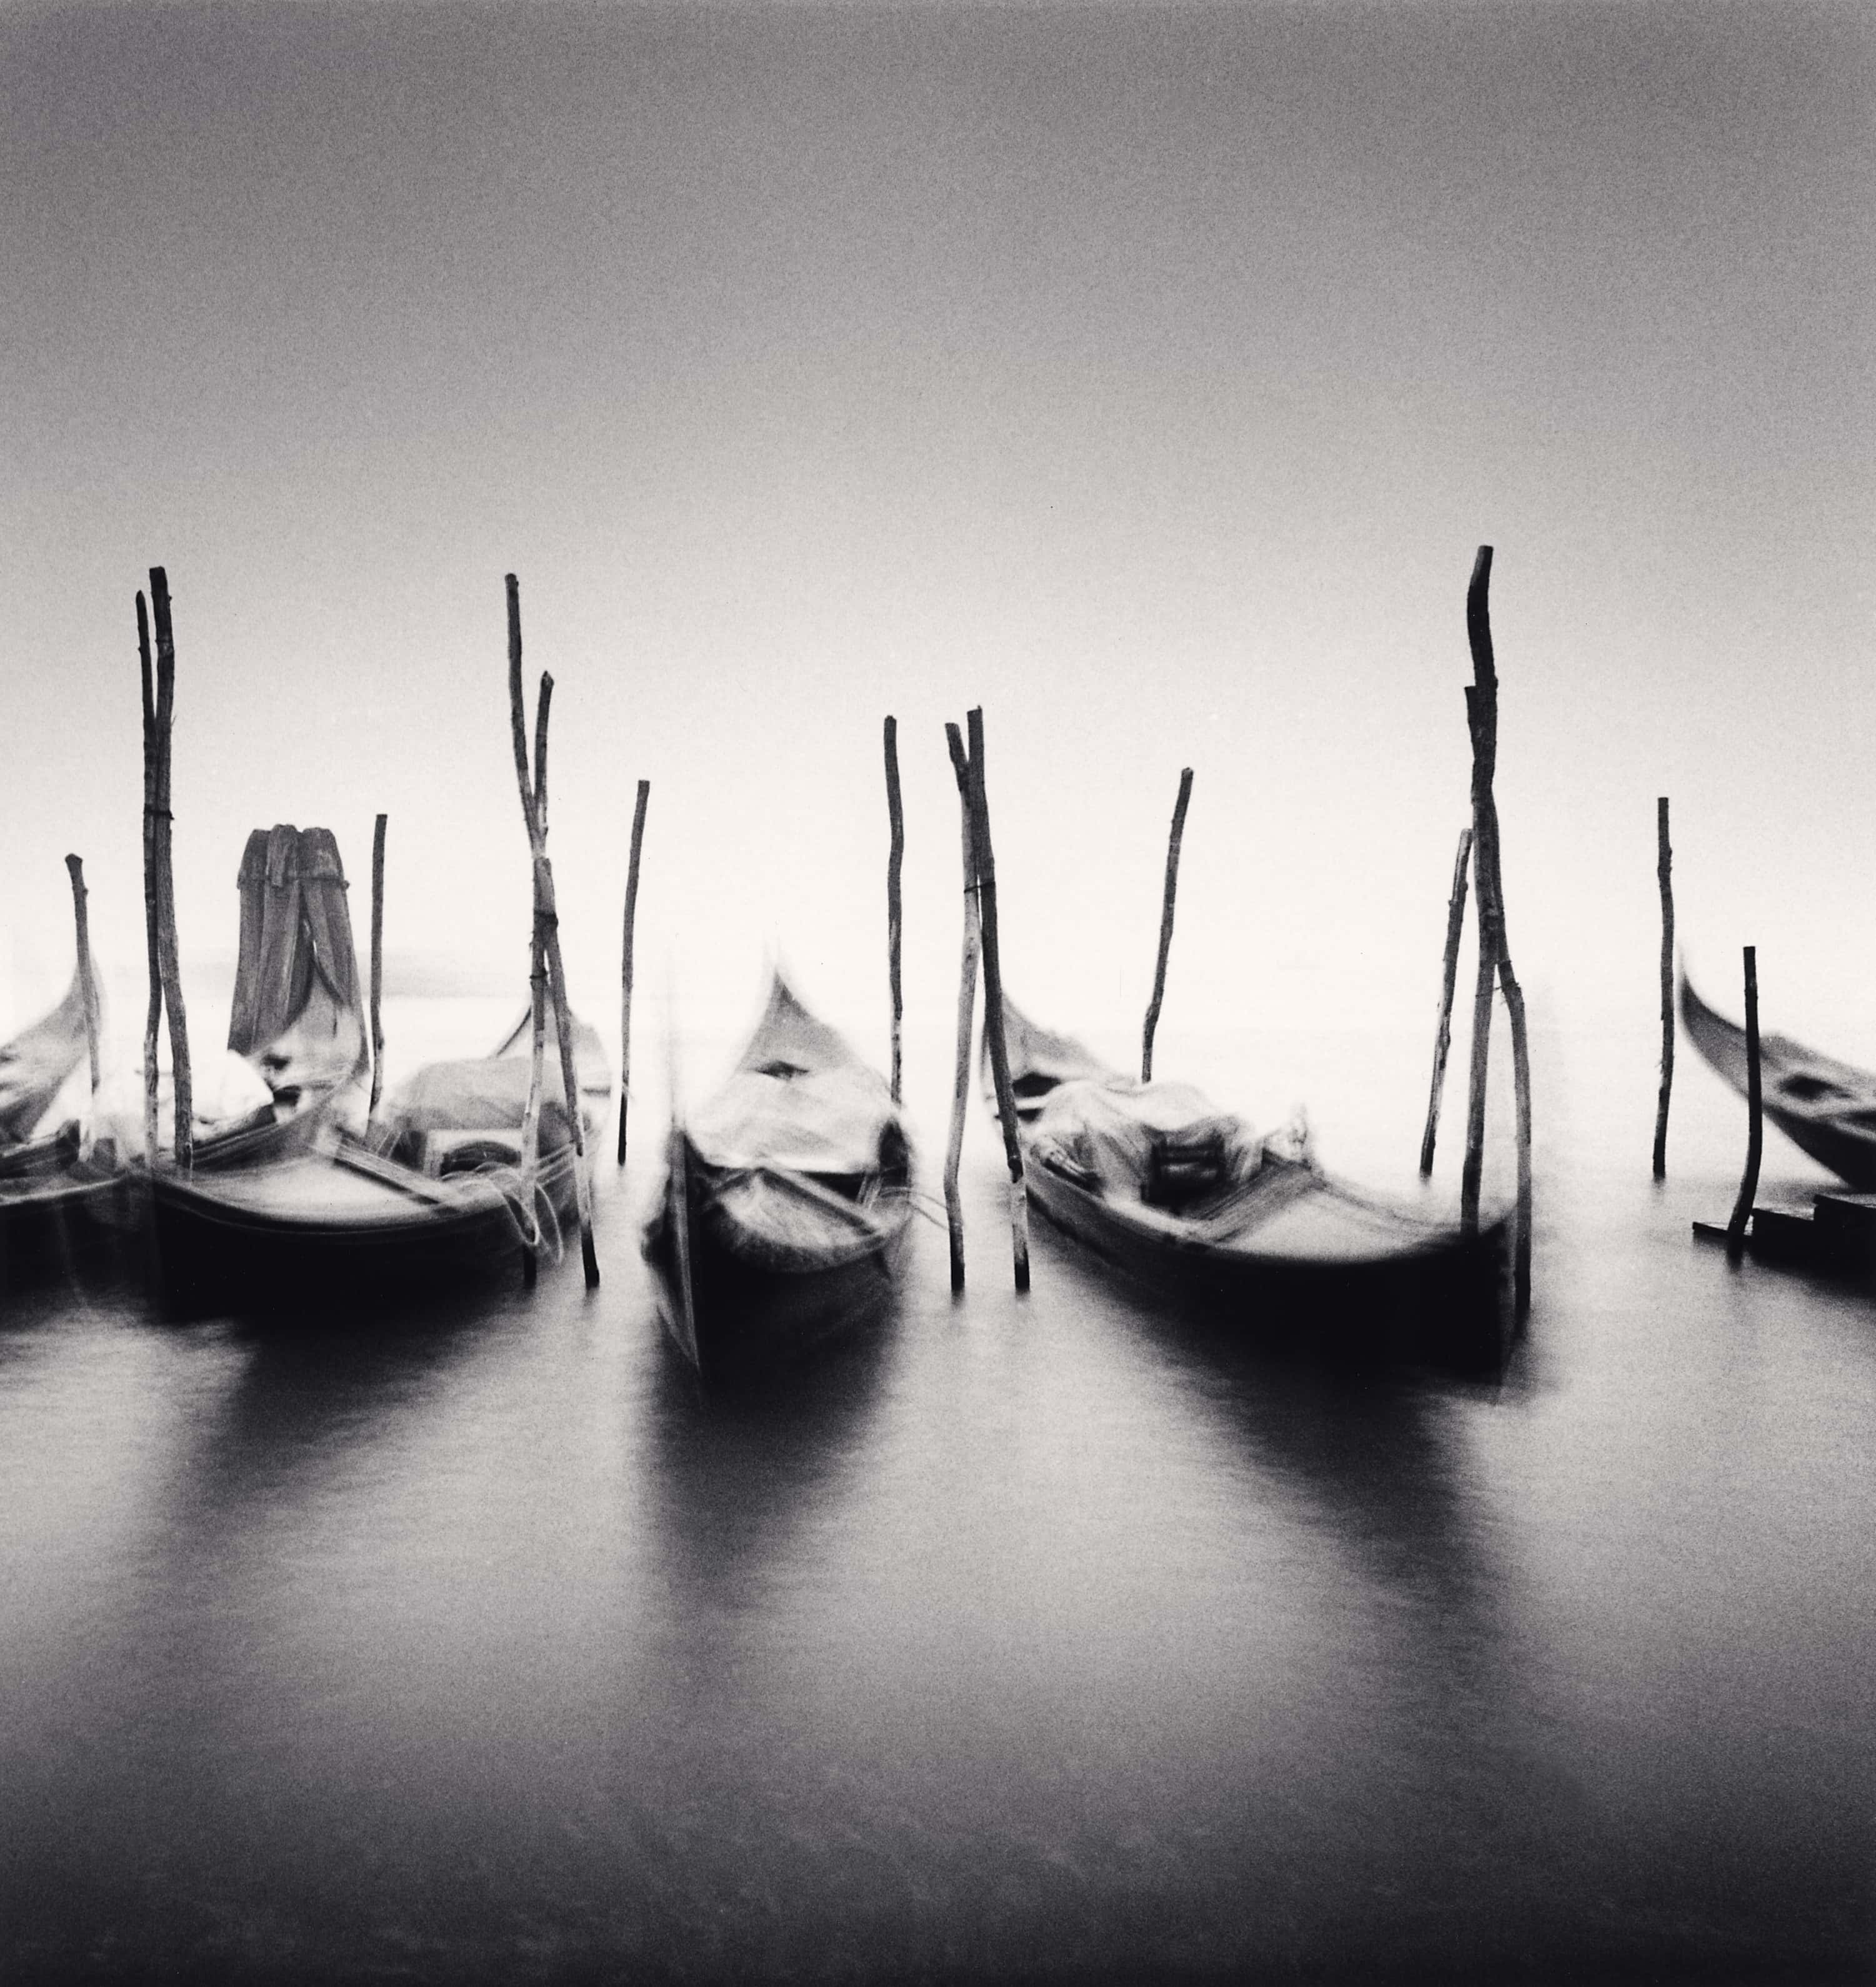 Six Gondolas, Giadini ex Reali, Venice, Italy, 1980 Michael Kenna